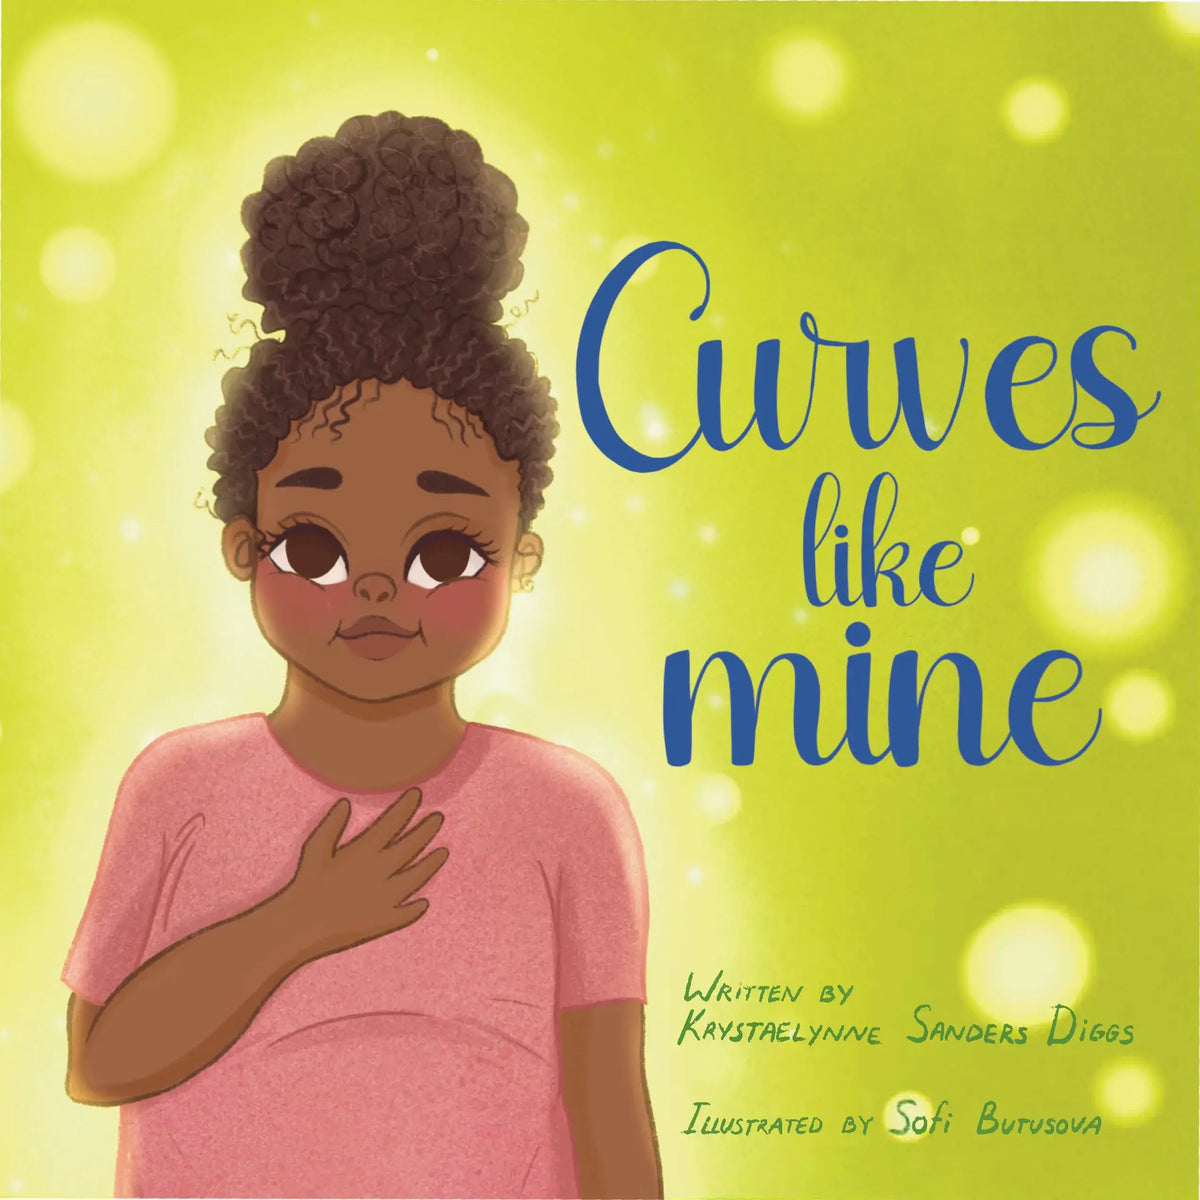 Curves Like Mine (EBook) - Author Krystaelynne Sanders Diggs